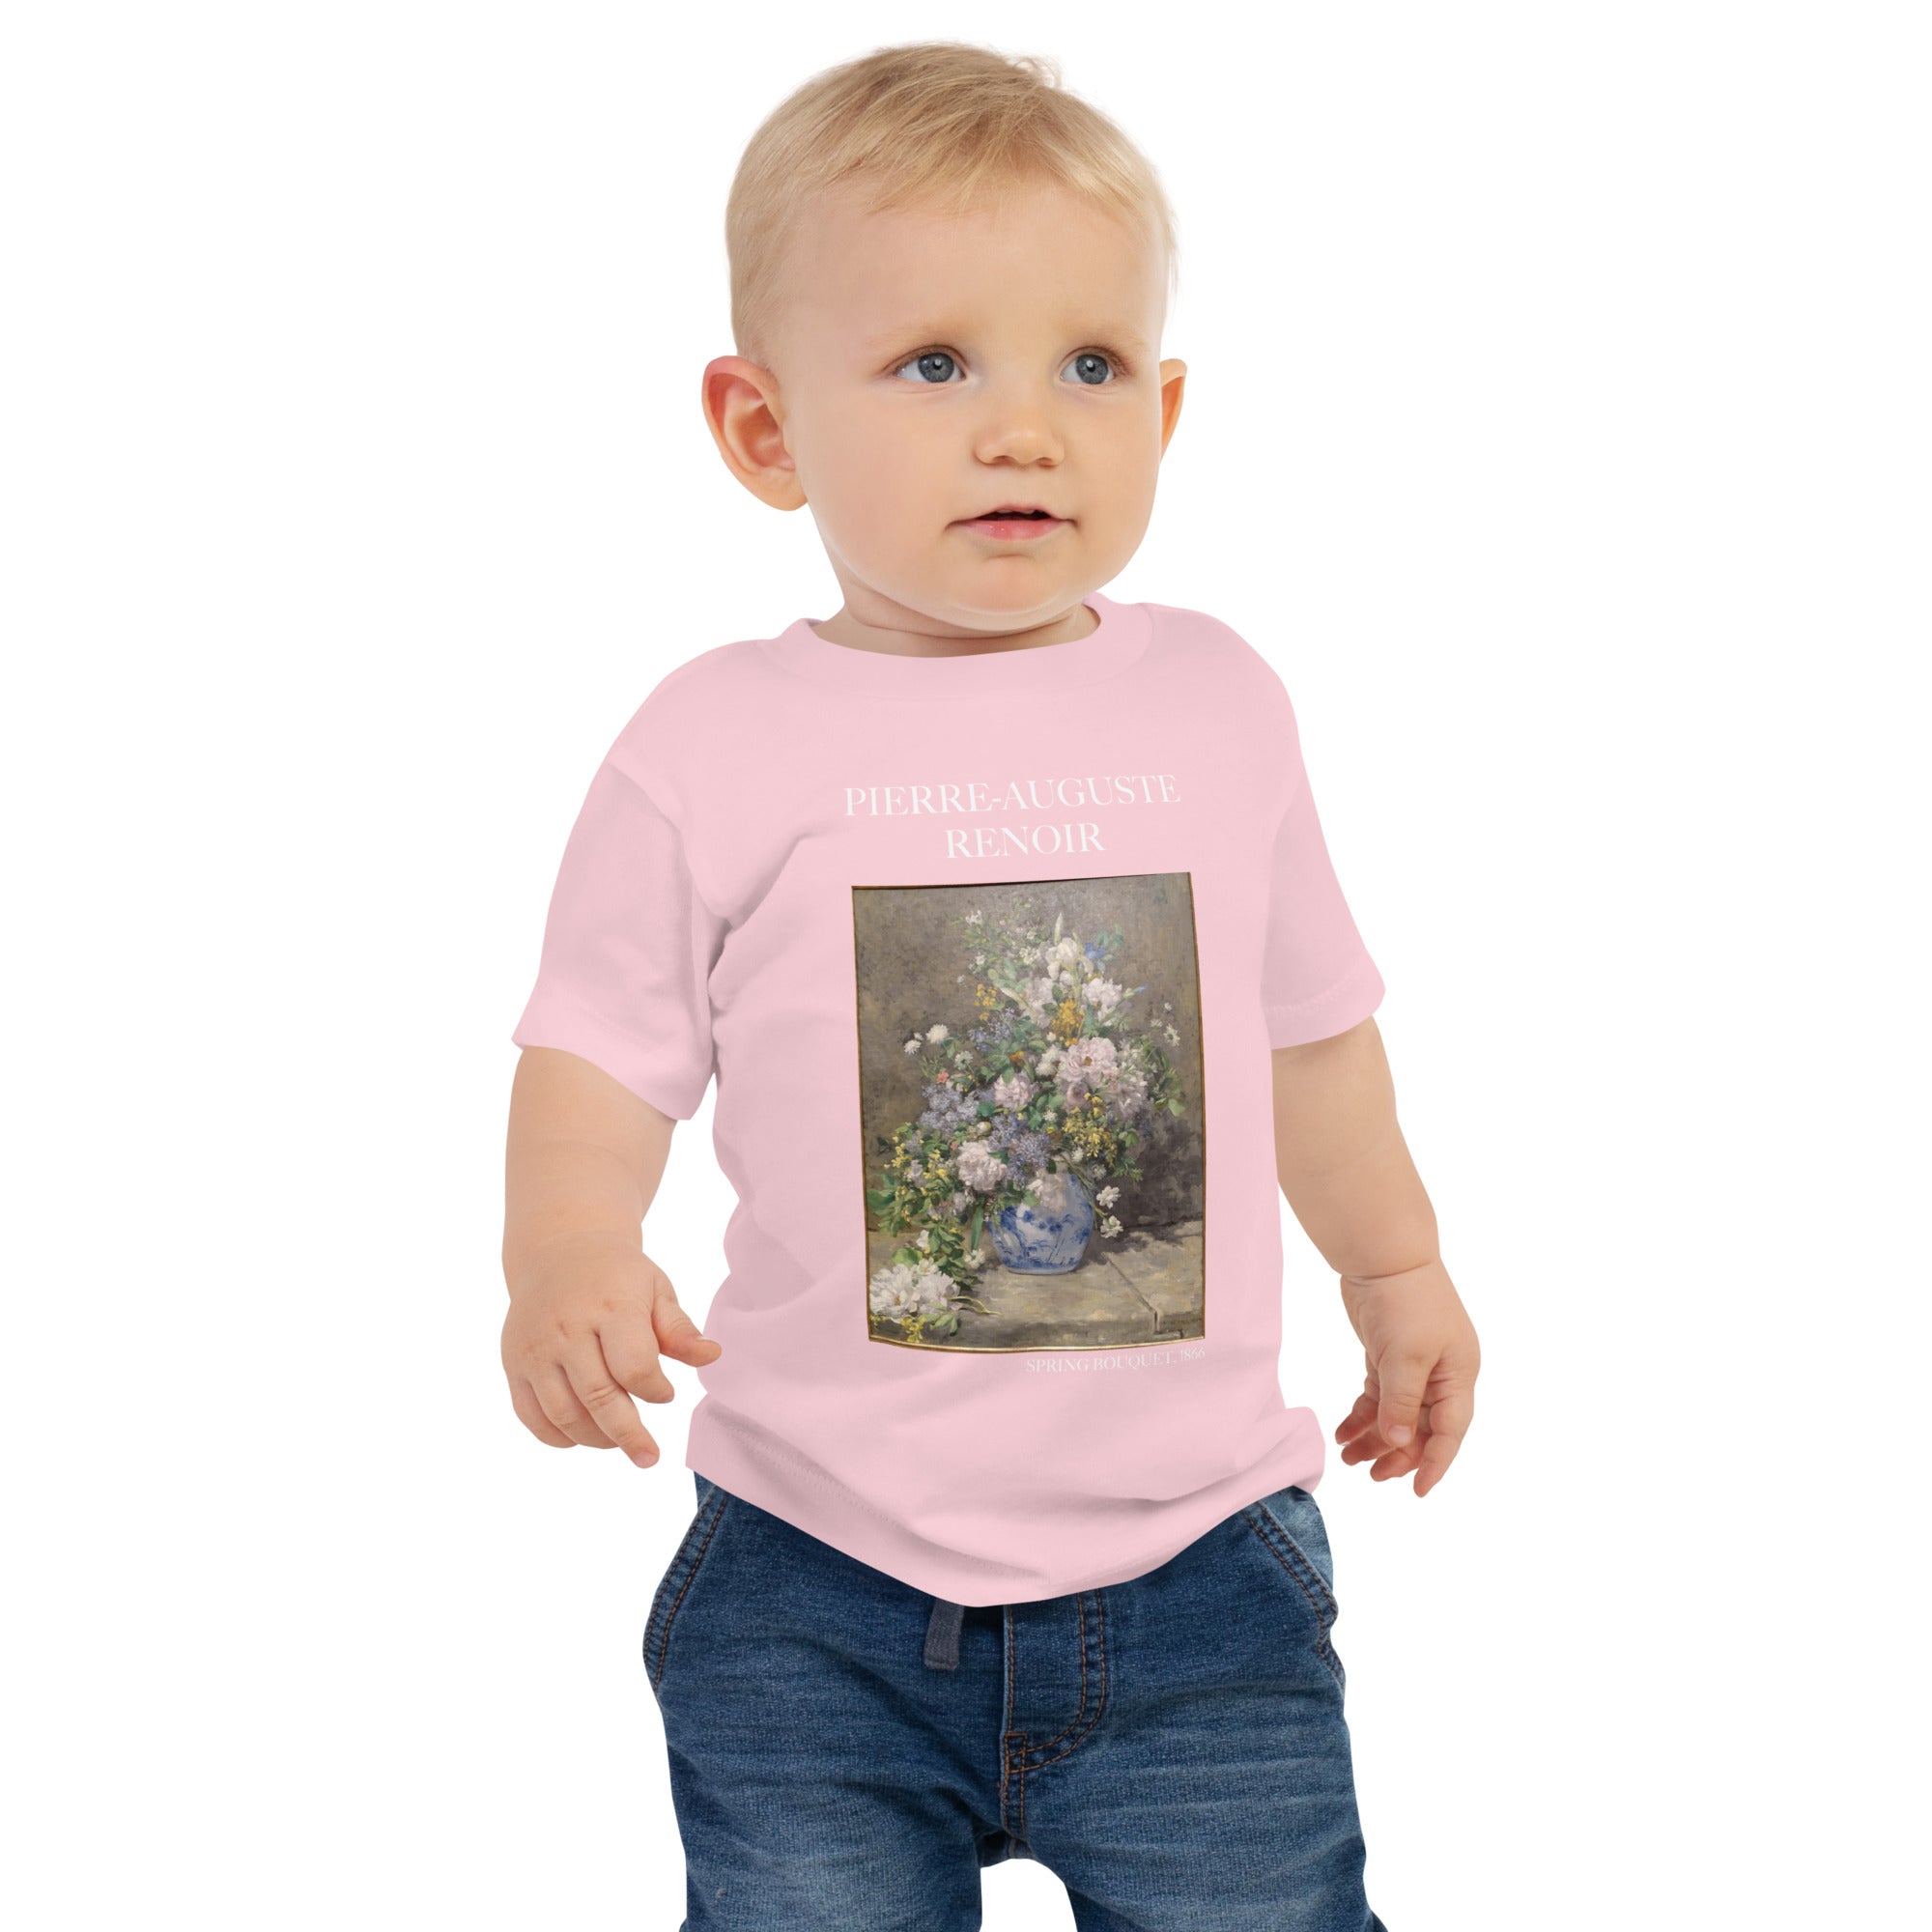 Pierre-Auguste Renoir 'Spring Bouquet' Famous Painting Baby Staple T-Shirt | Premium Baby Art Tee